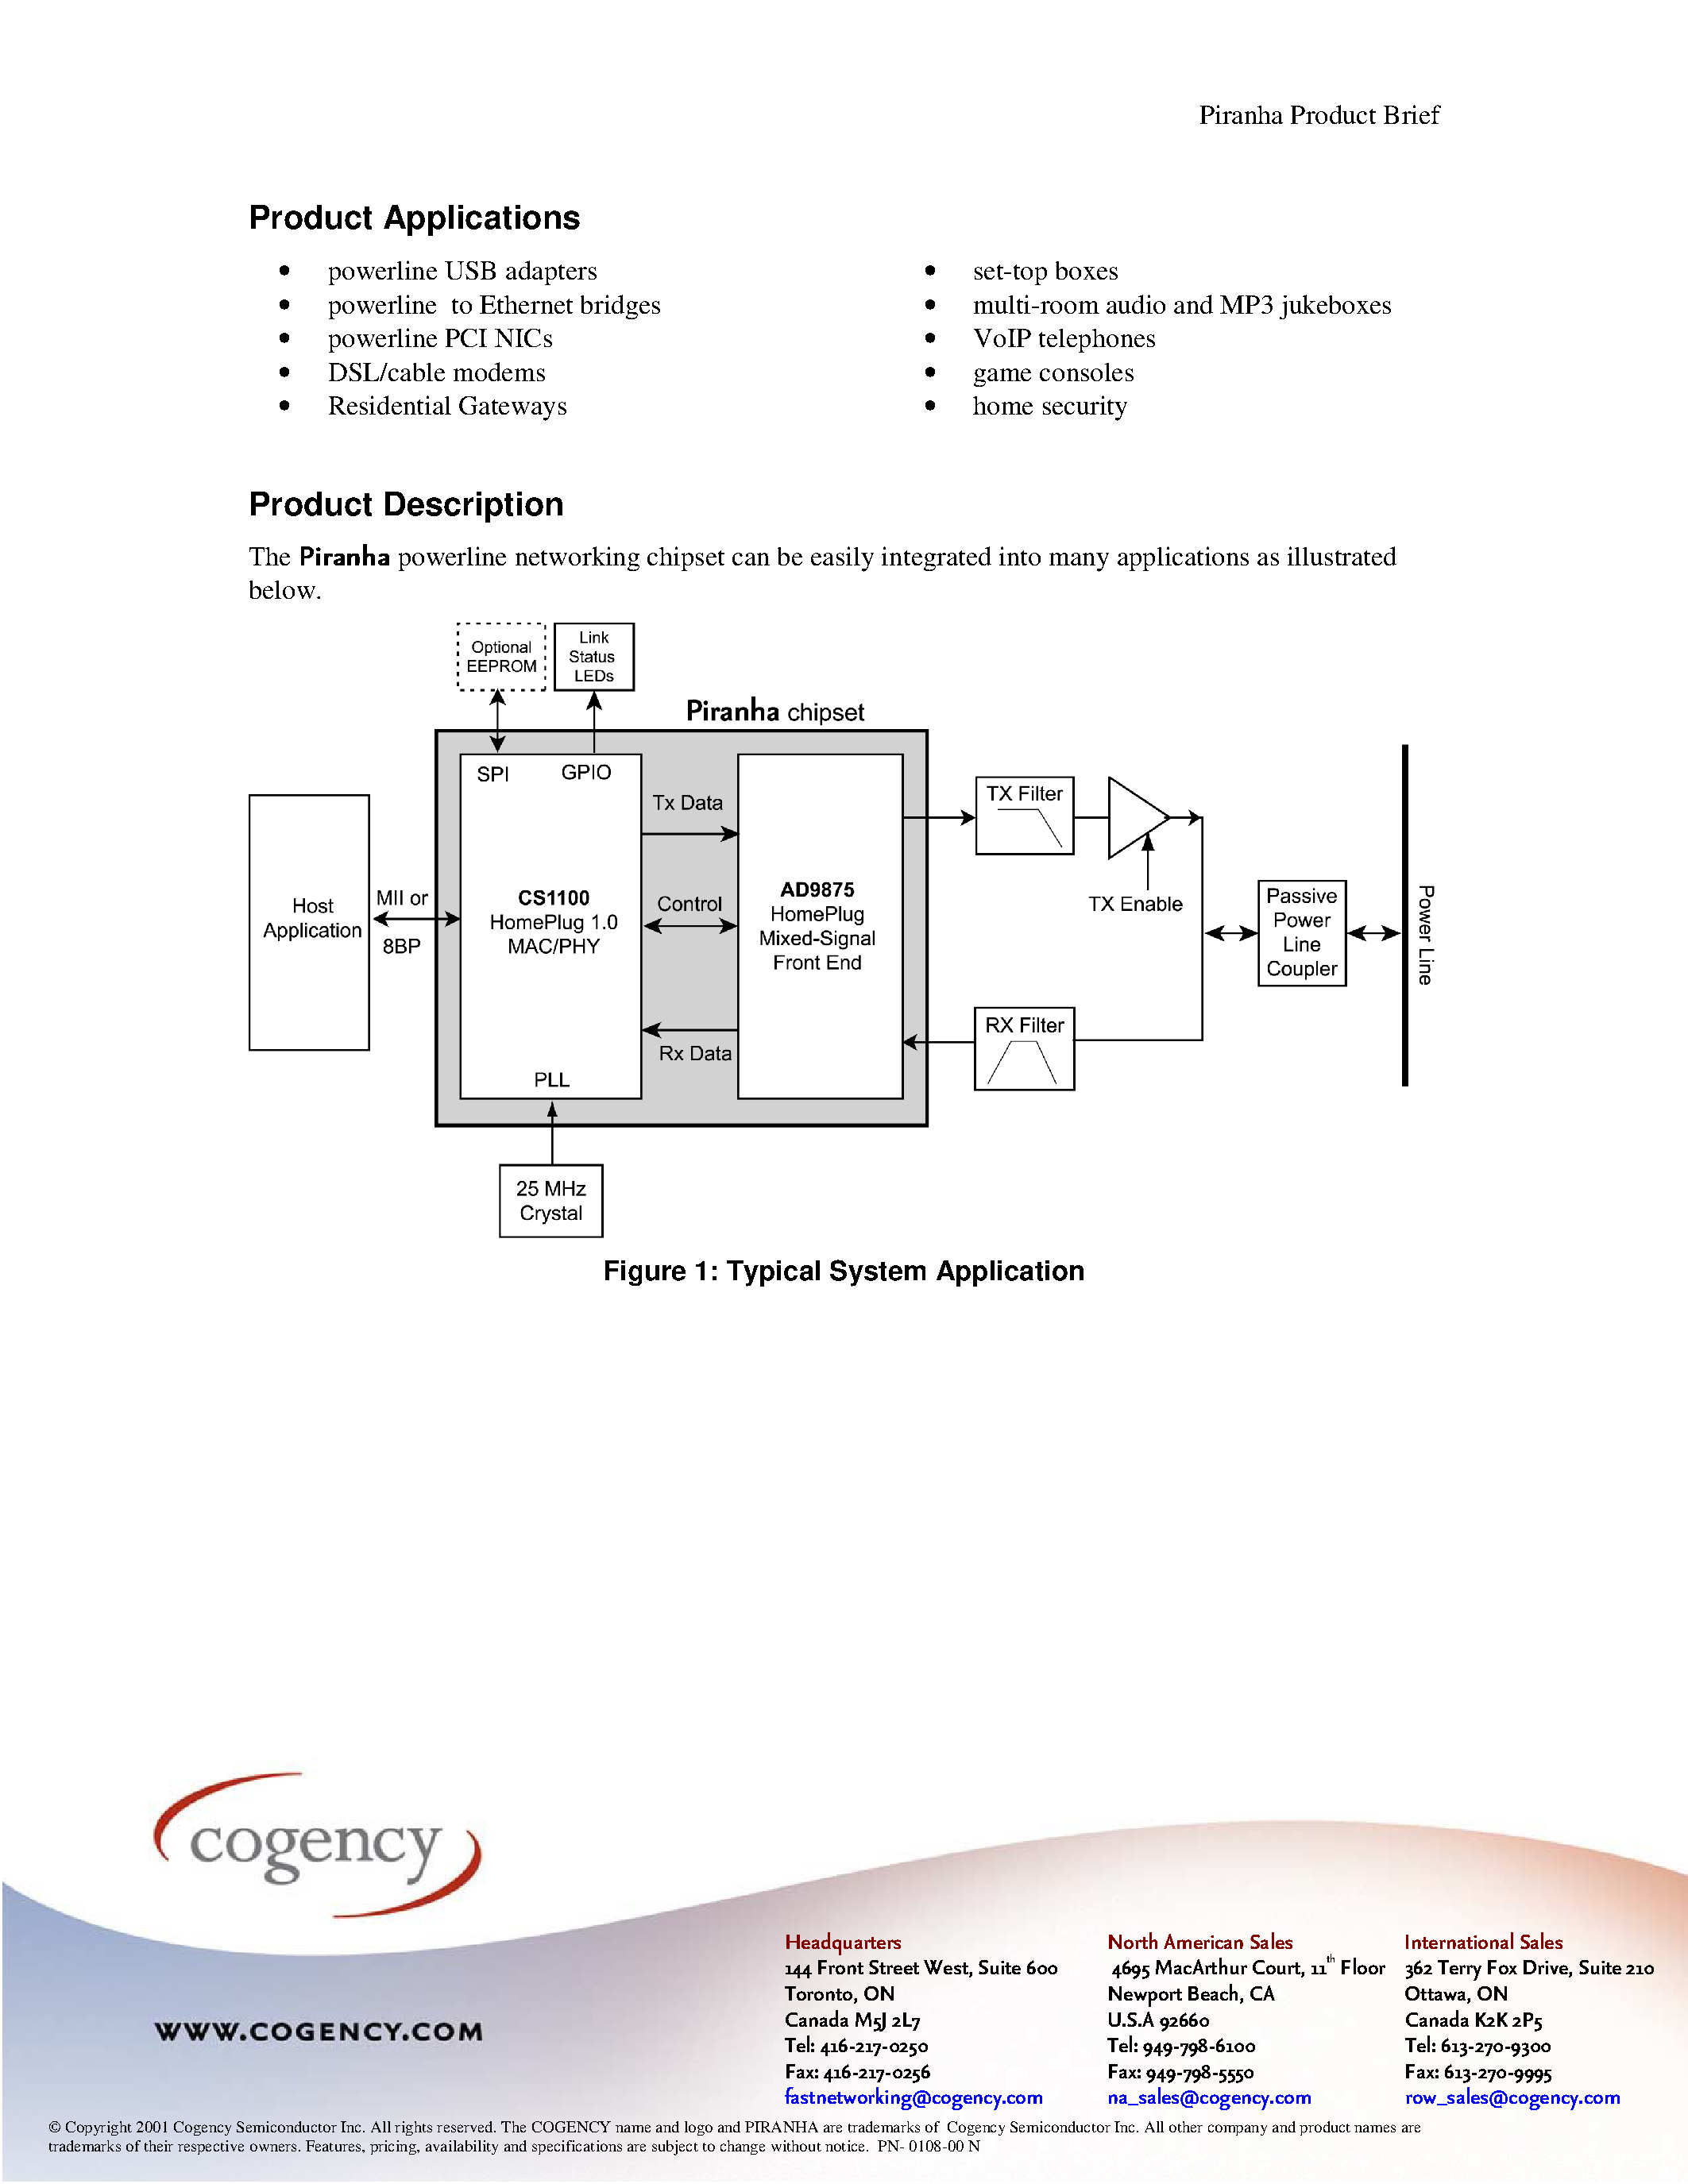 Даташит CS1100 - Powerline Networking Chipset страница 2